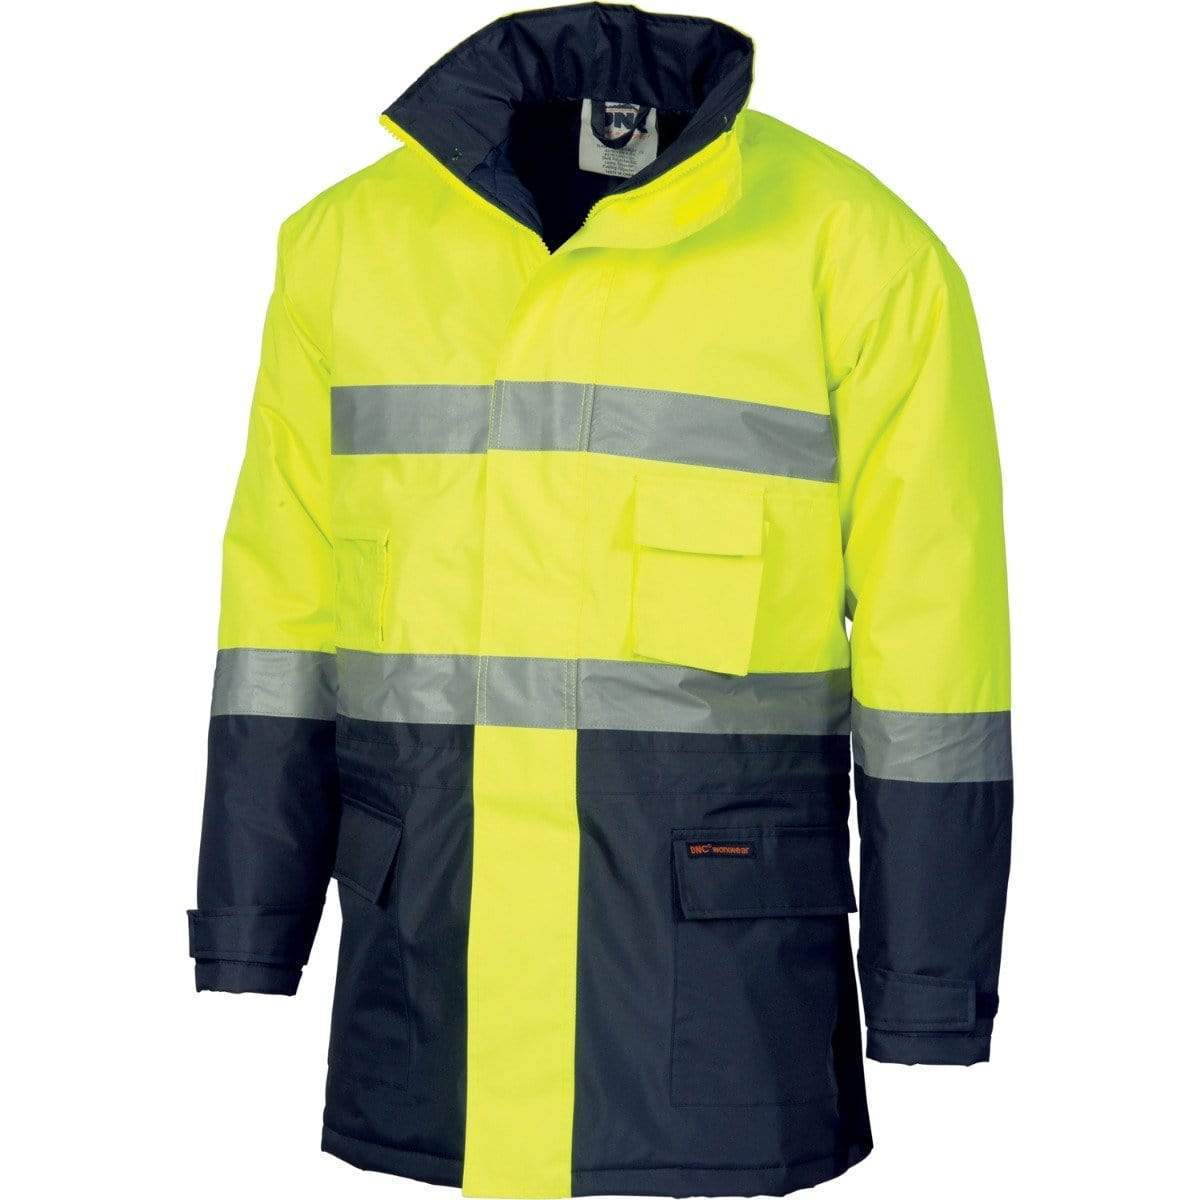 Dnc Workwear Hi-vis D/n Two-tone Parka Jacket - 3768 Work Wear DNC Workwear Yellow/Navy XS 